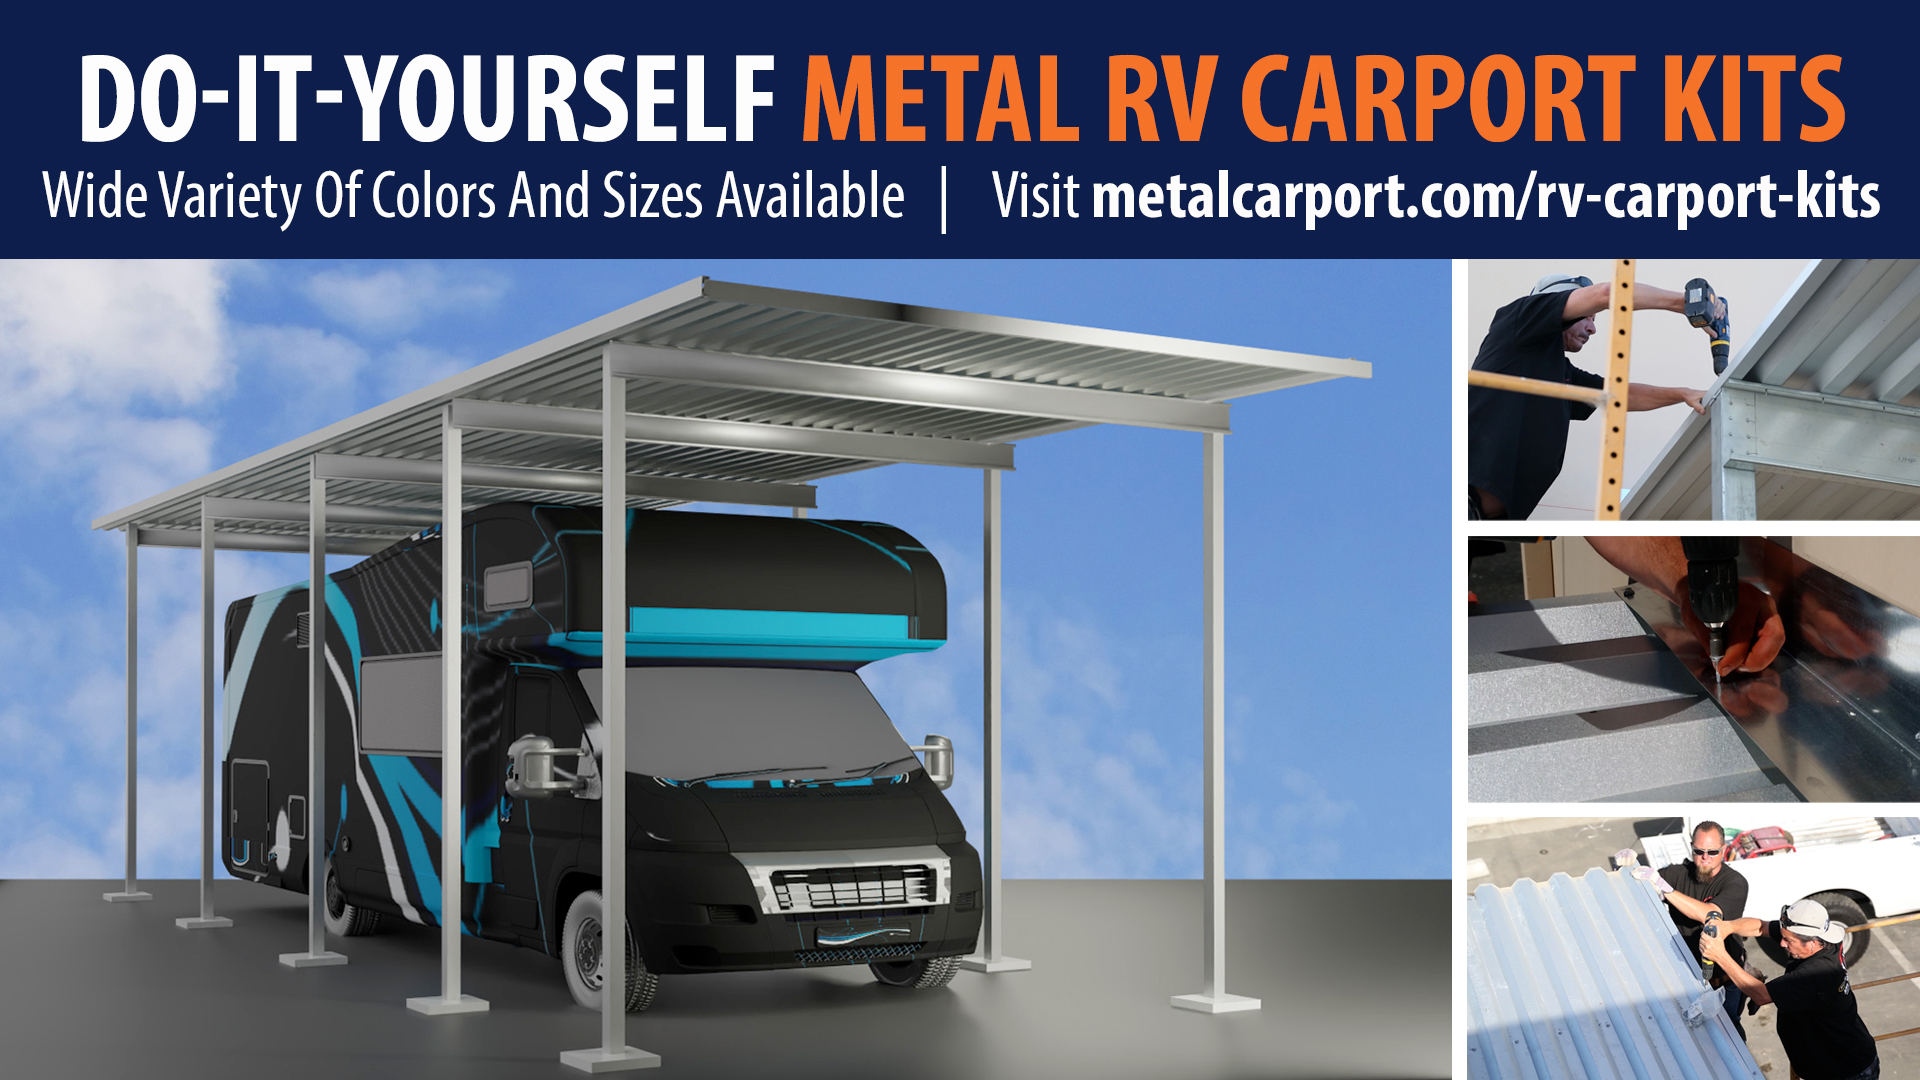 Do-It-Yourself Metal RV Carport Kits Web Banner 01